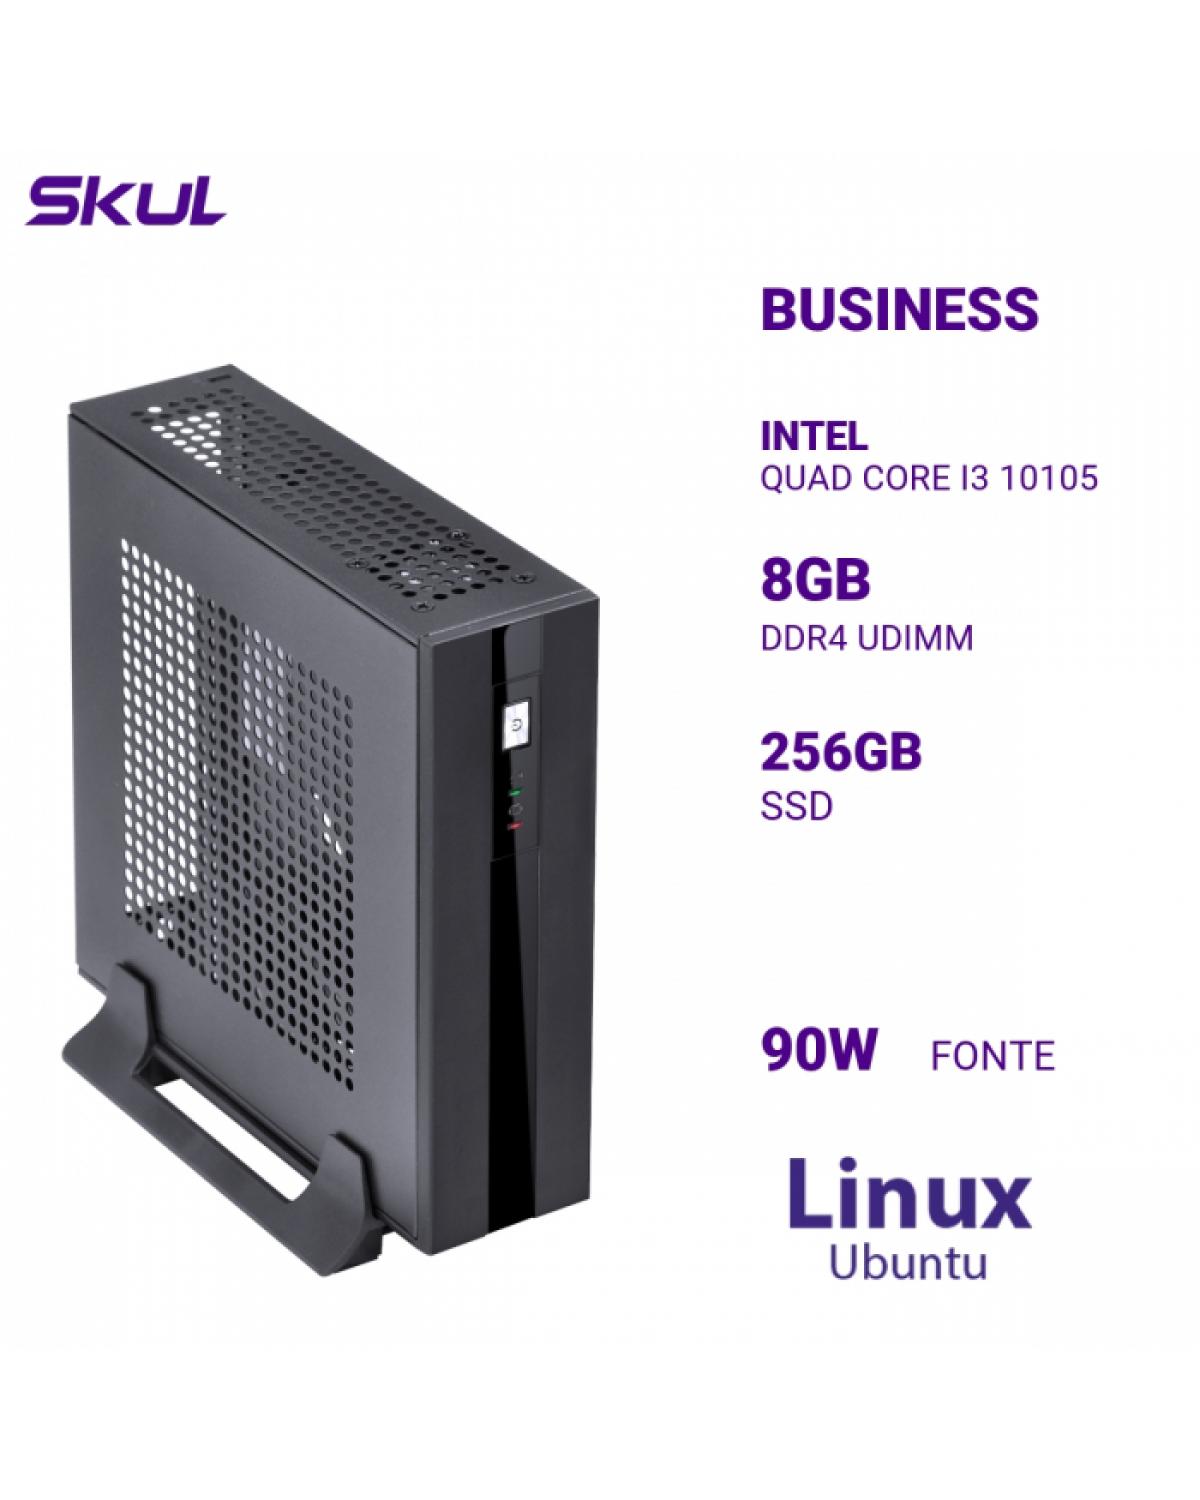 MINI COMPUTADOR BUSINESS B300 QUAD CORE I3 10105 MEM 8GB DDR4 SSD 256GB FONTE 90W LINUX